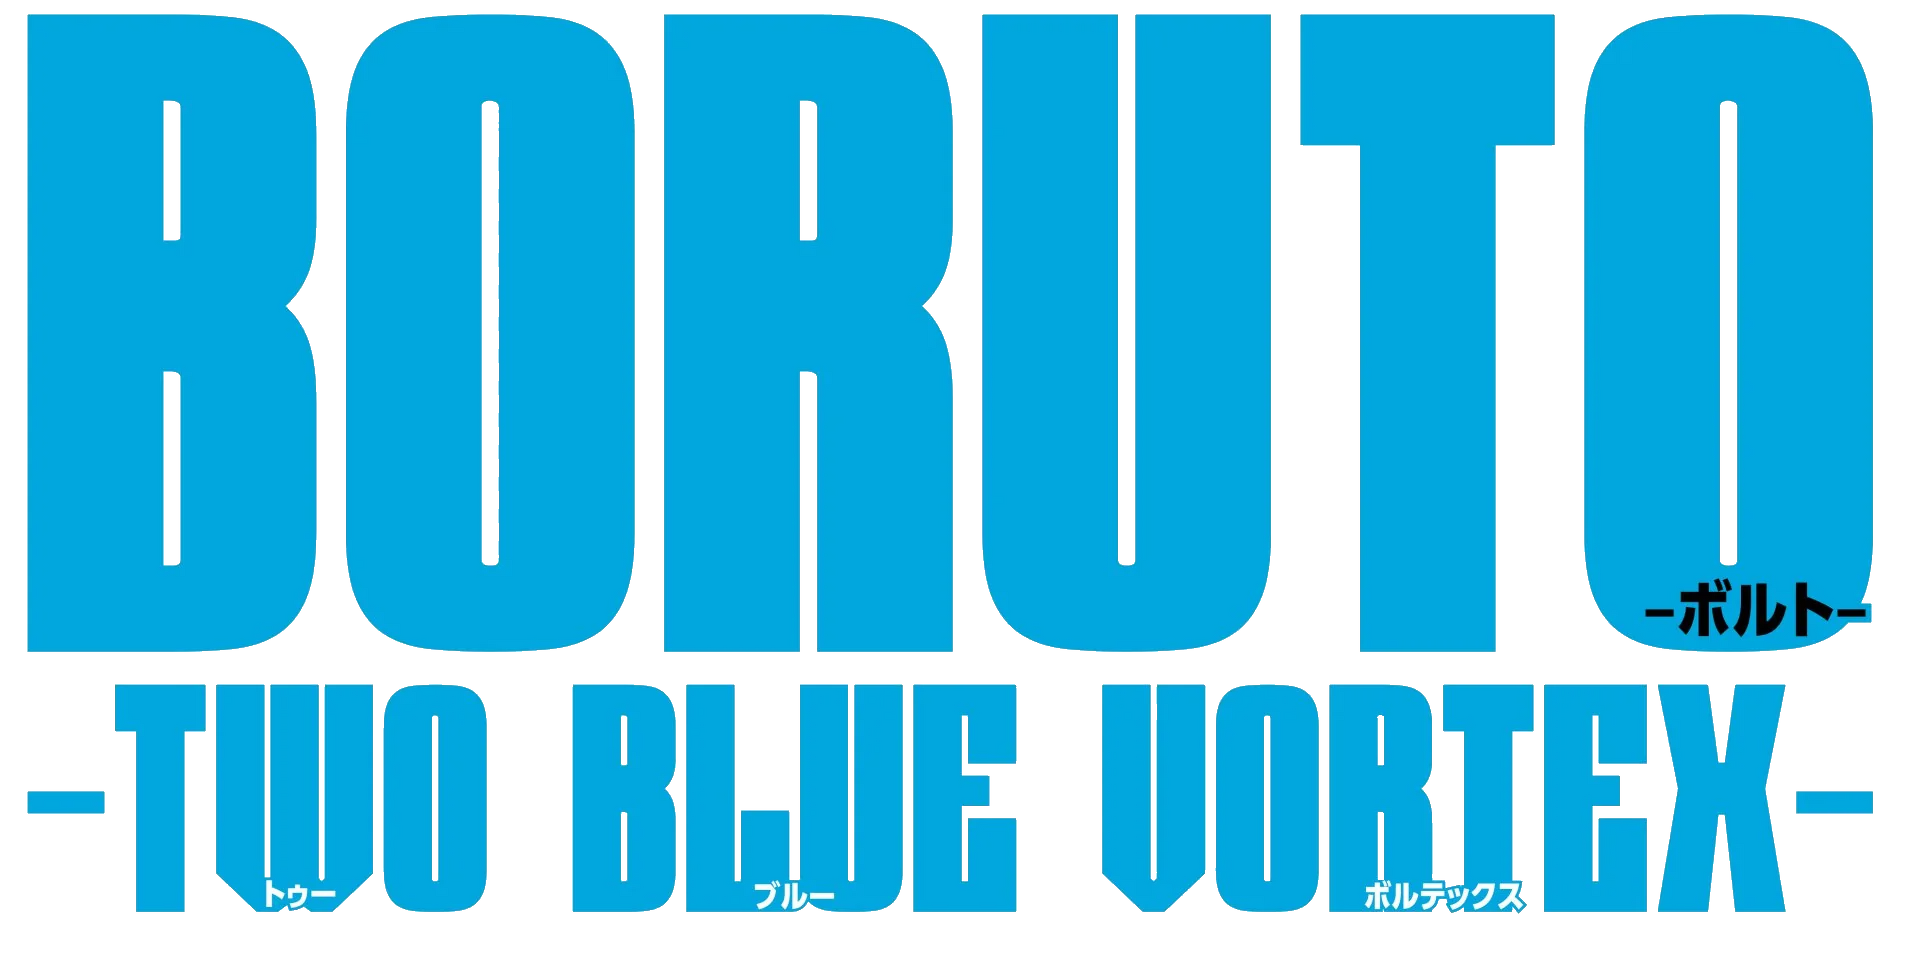 Boruto: Two Blue Vortex, Narutopedia